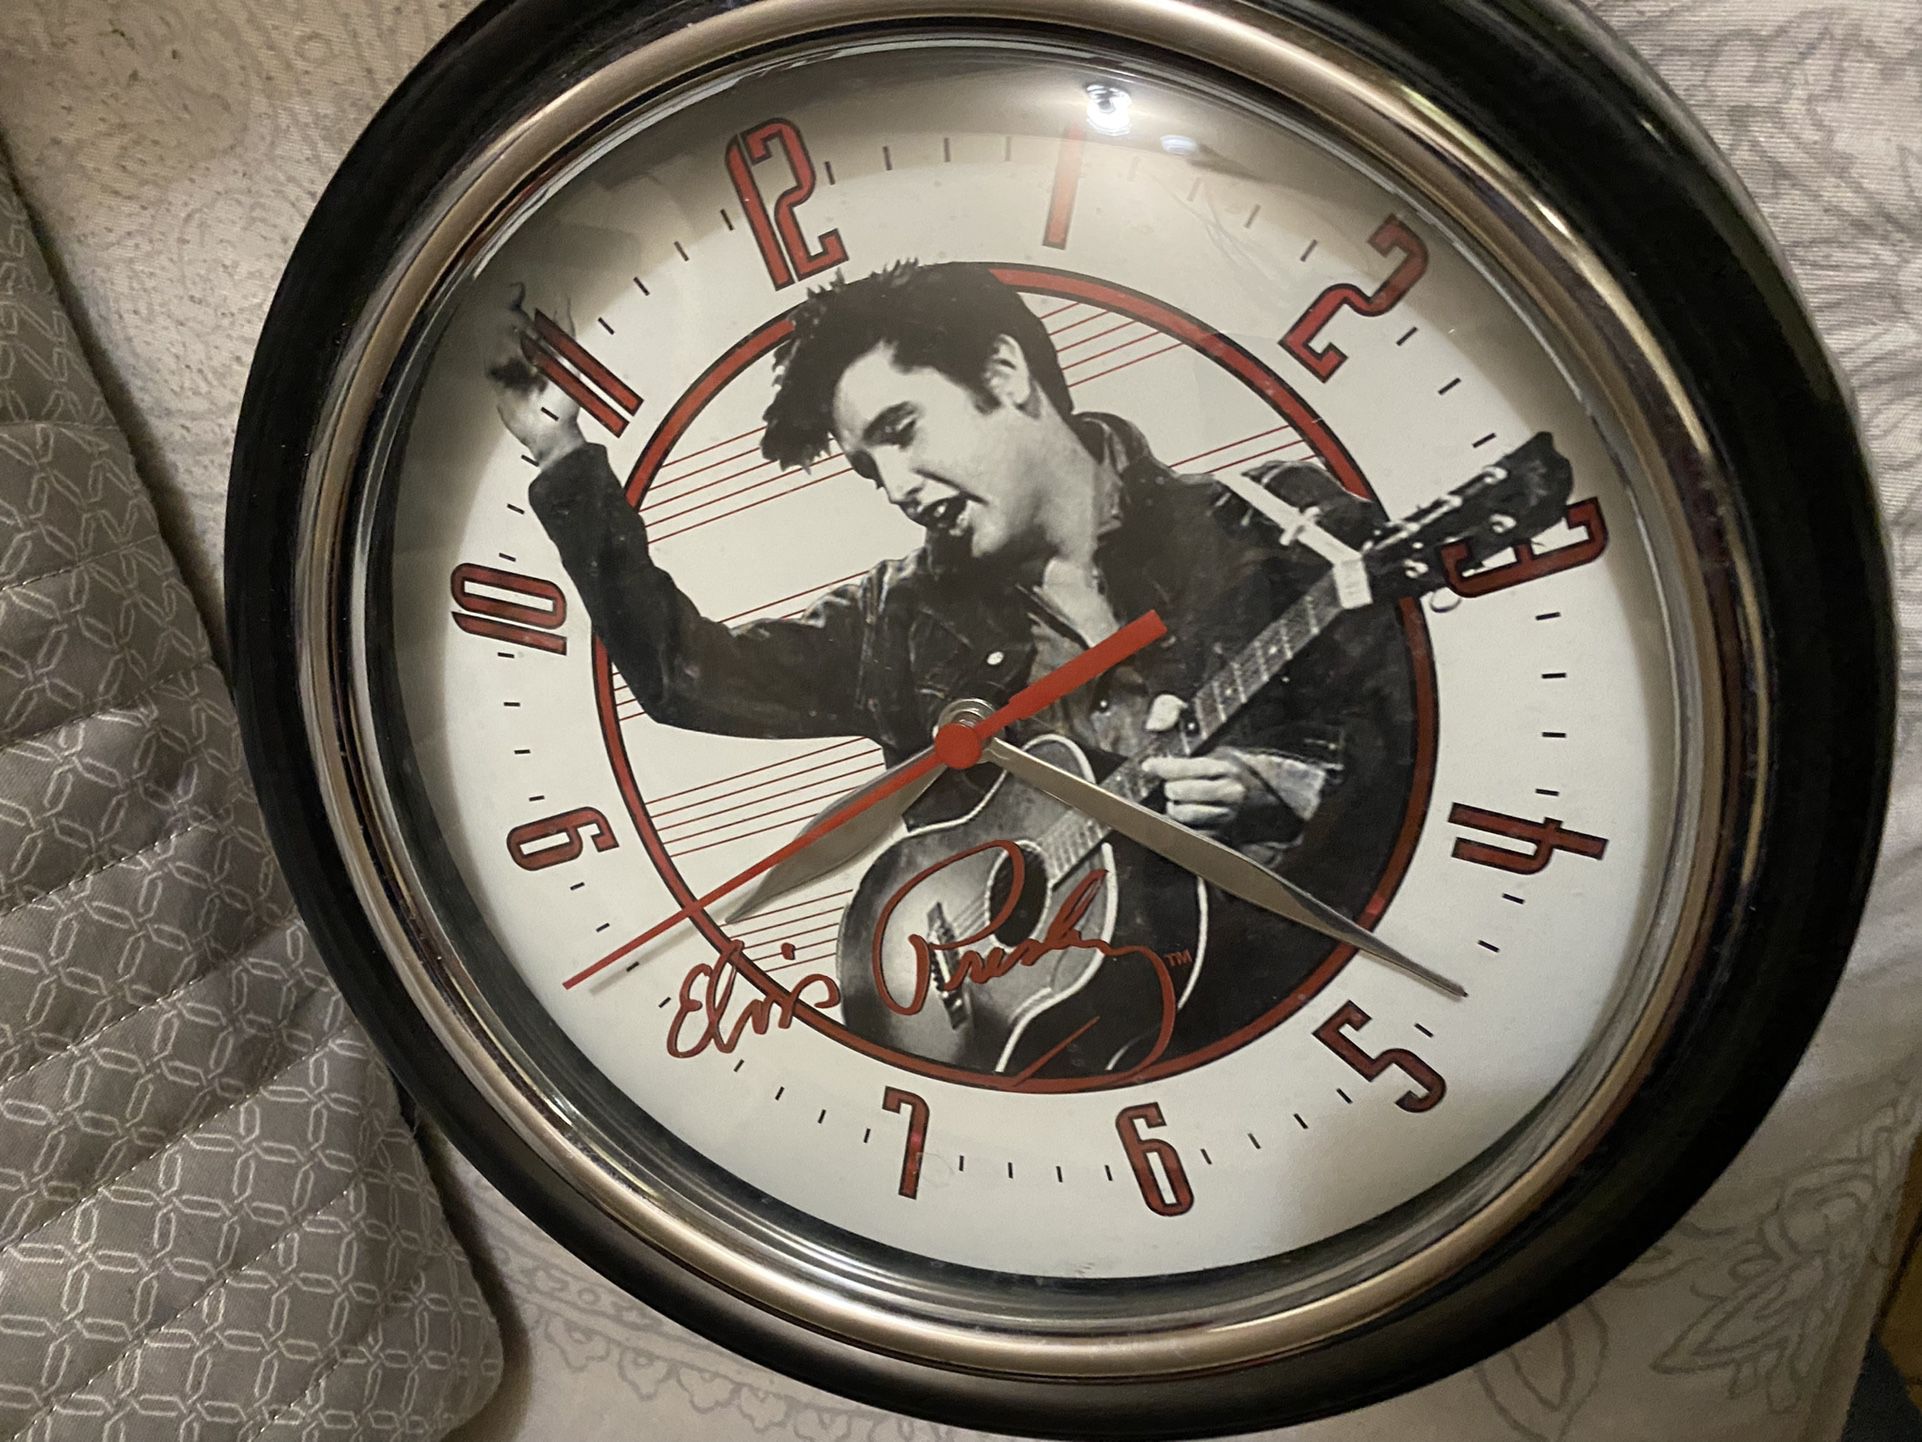 Elvis Presley Wall Clock